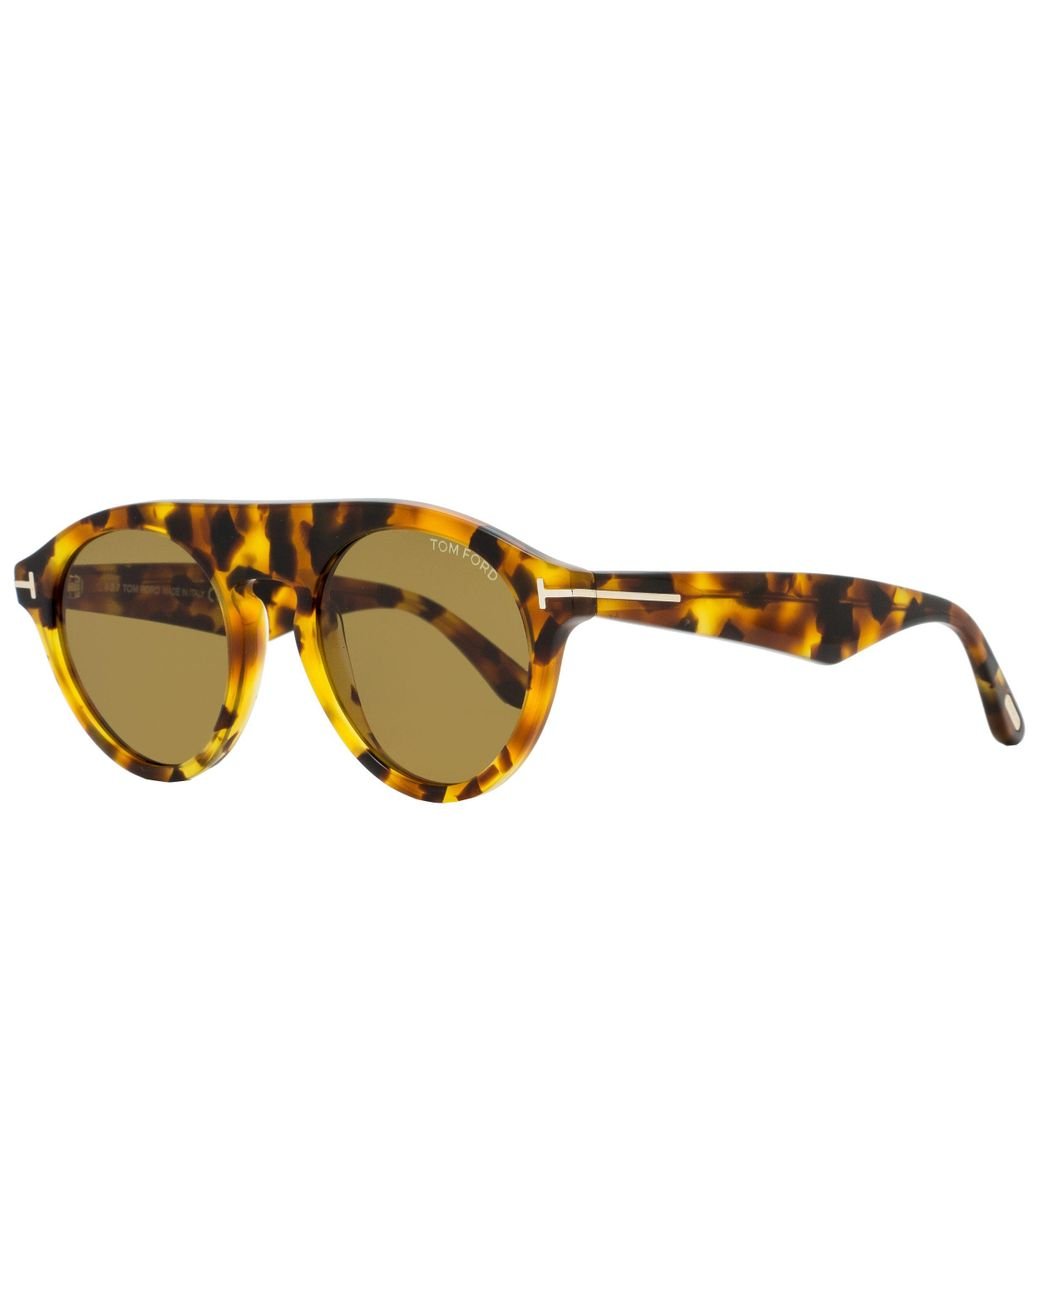 Tom Ford Black Sunglasses Christopher-02 Colored Havana 49mm